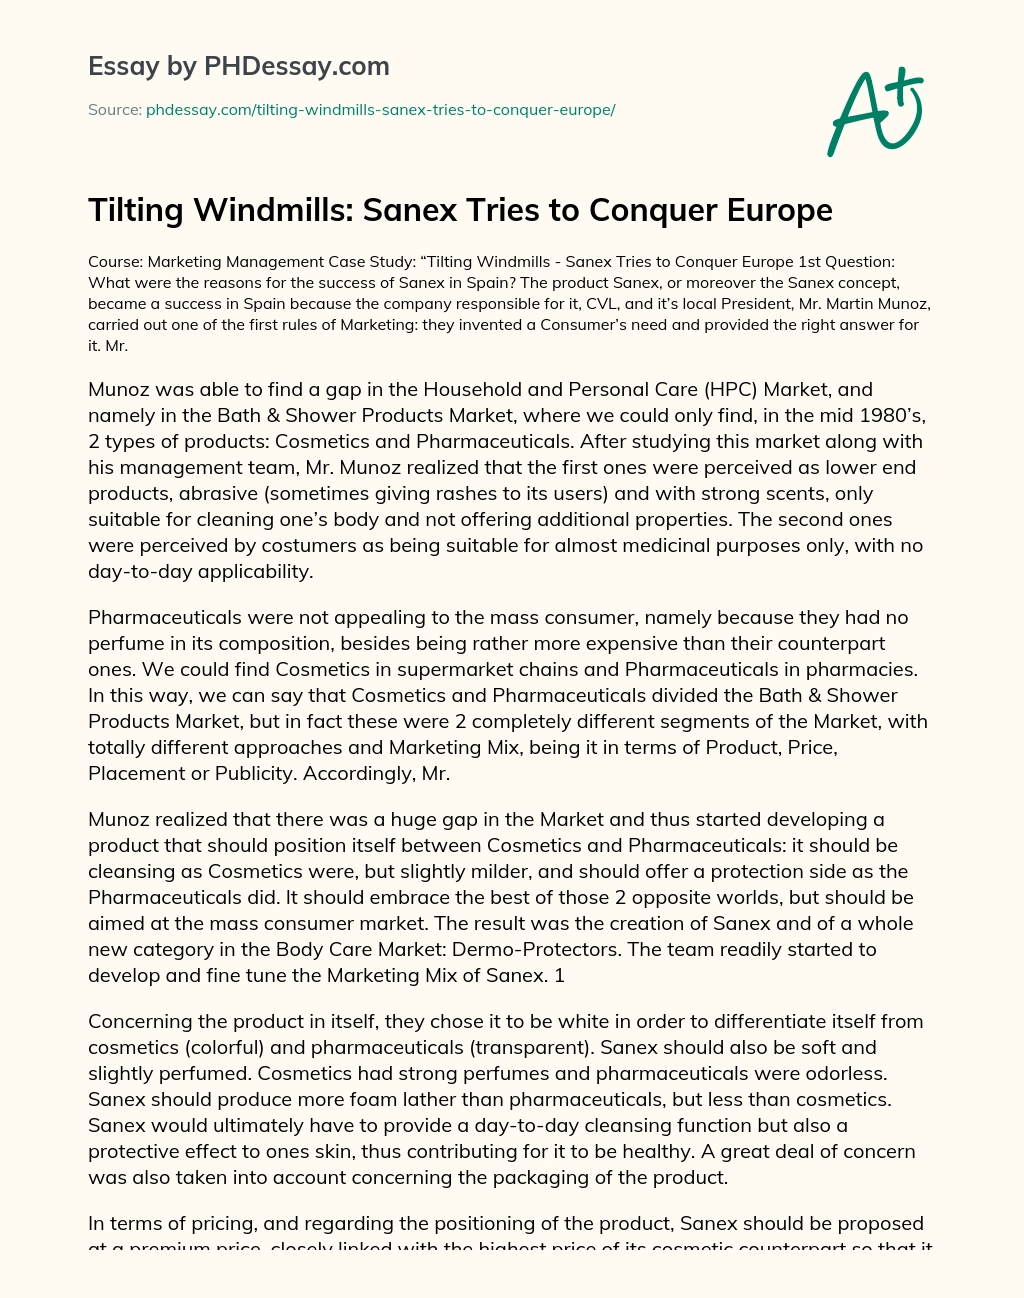 Tilting Windmills: Sanex Tries to Conquer Europe essay